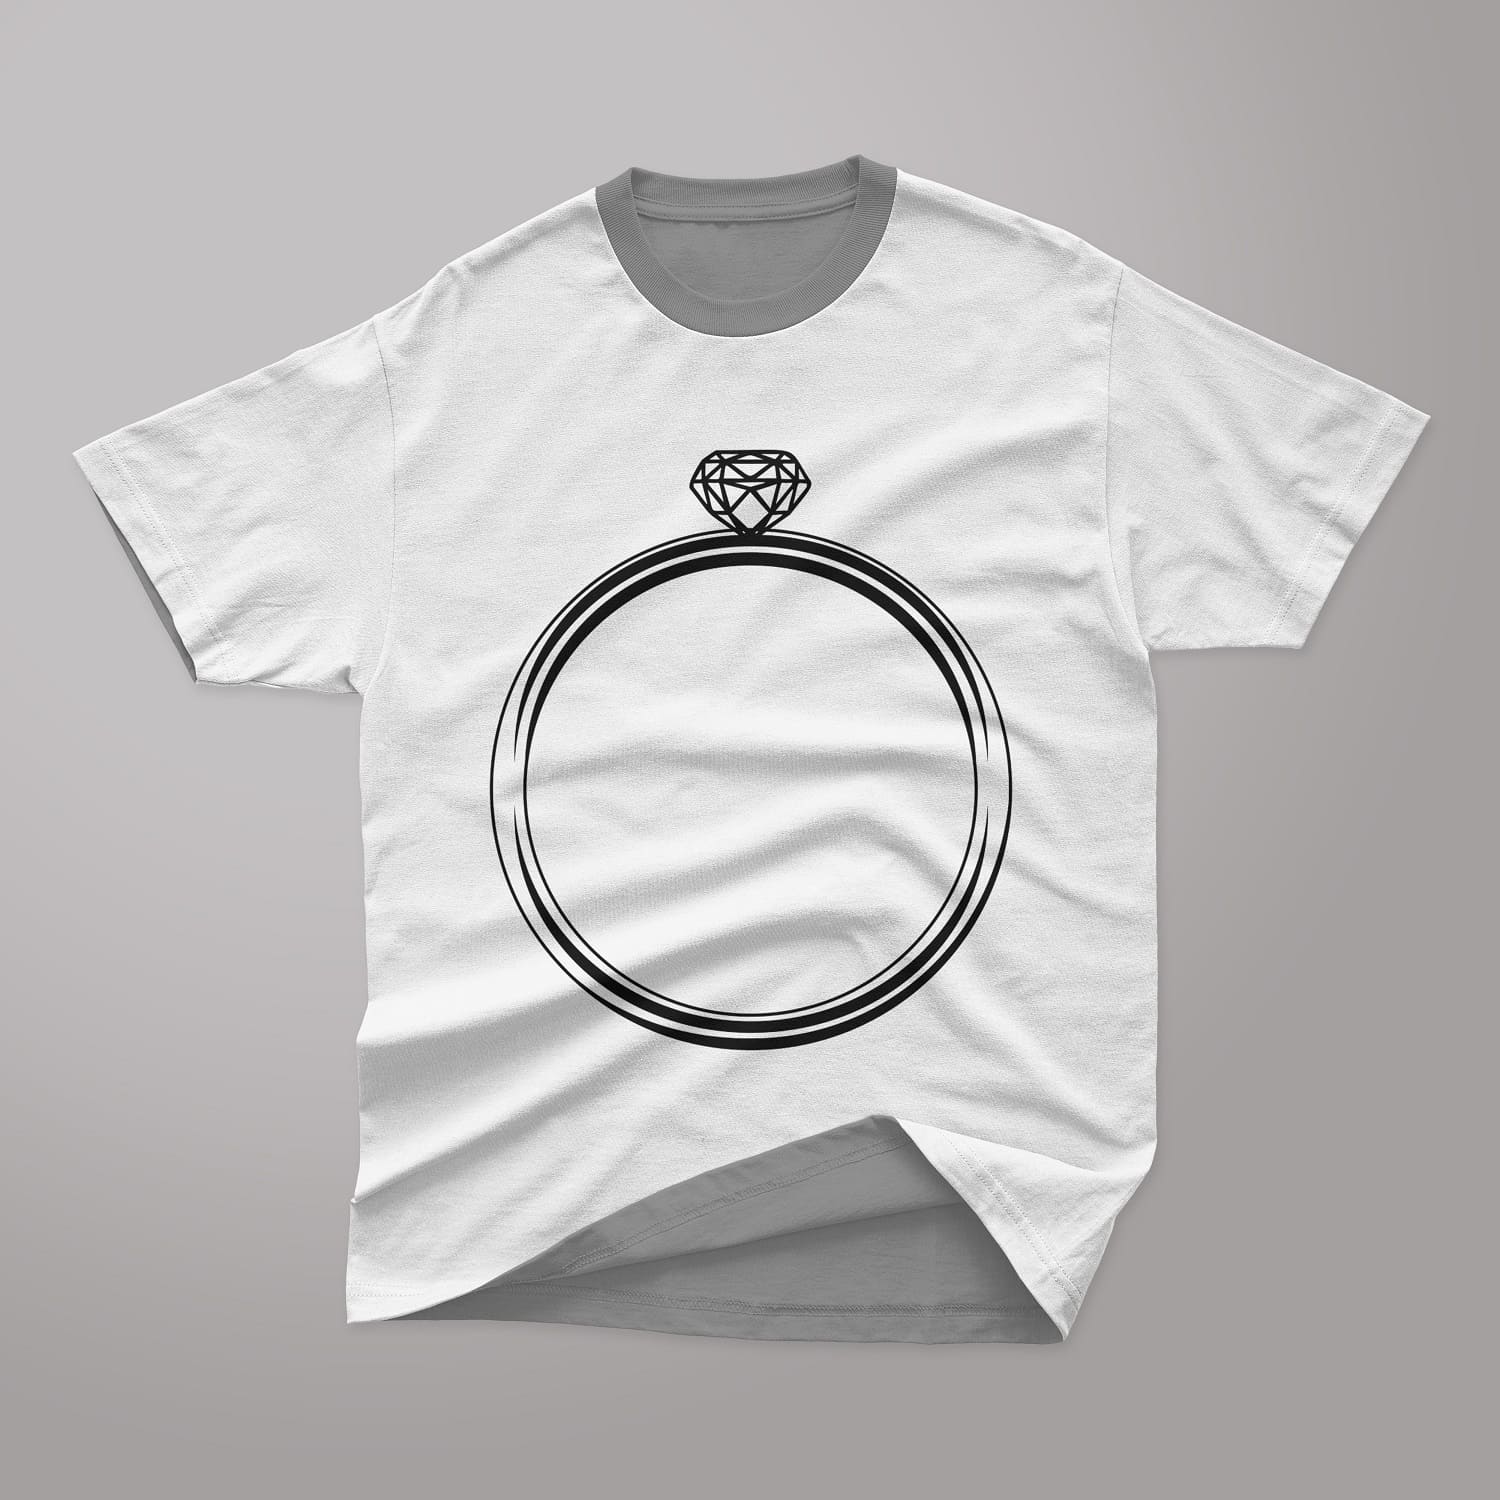 A wedding ring with a diamond drawn on a light gray t-shirt.